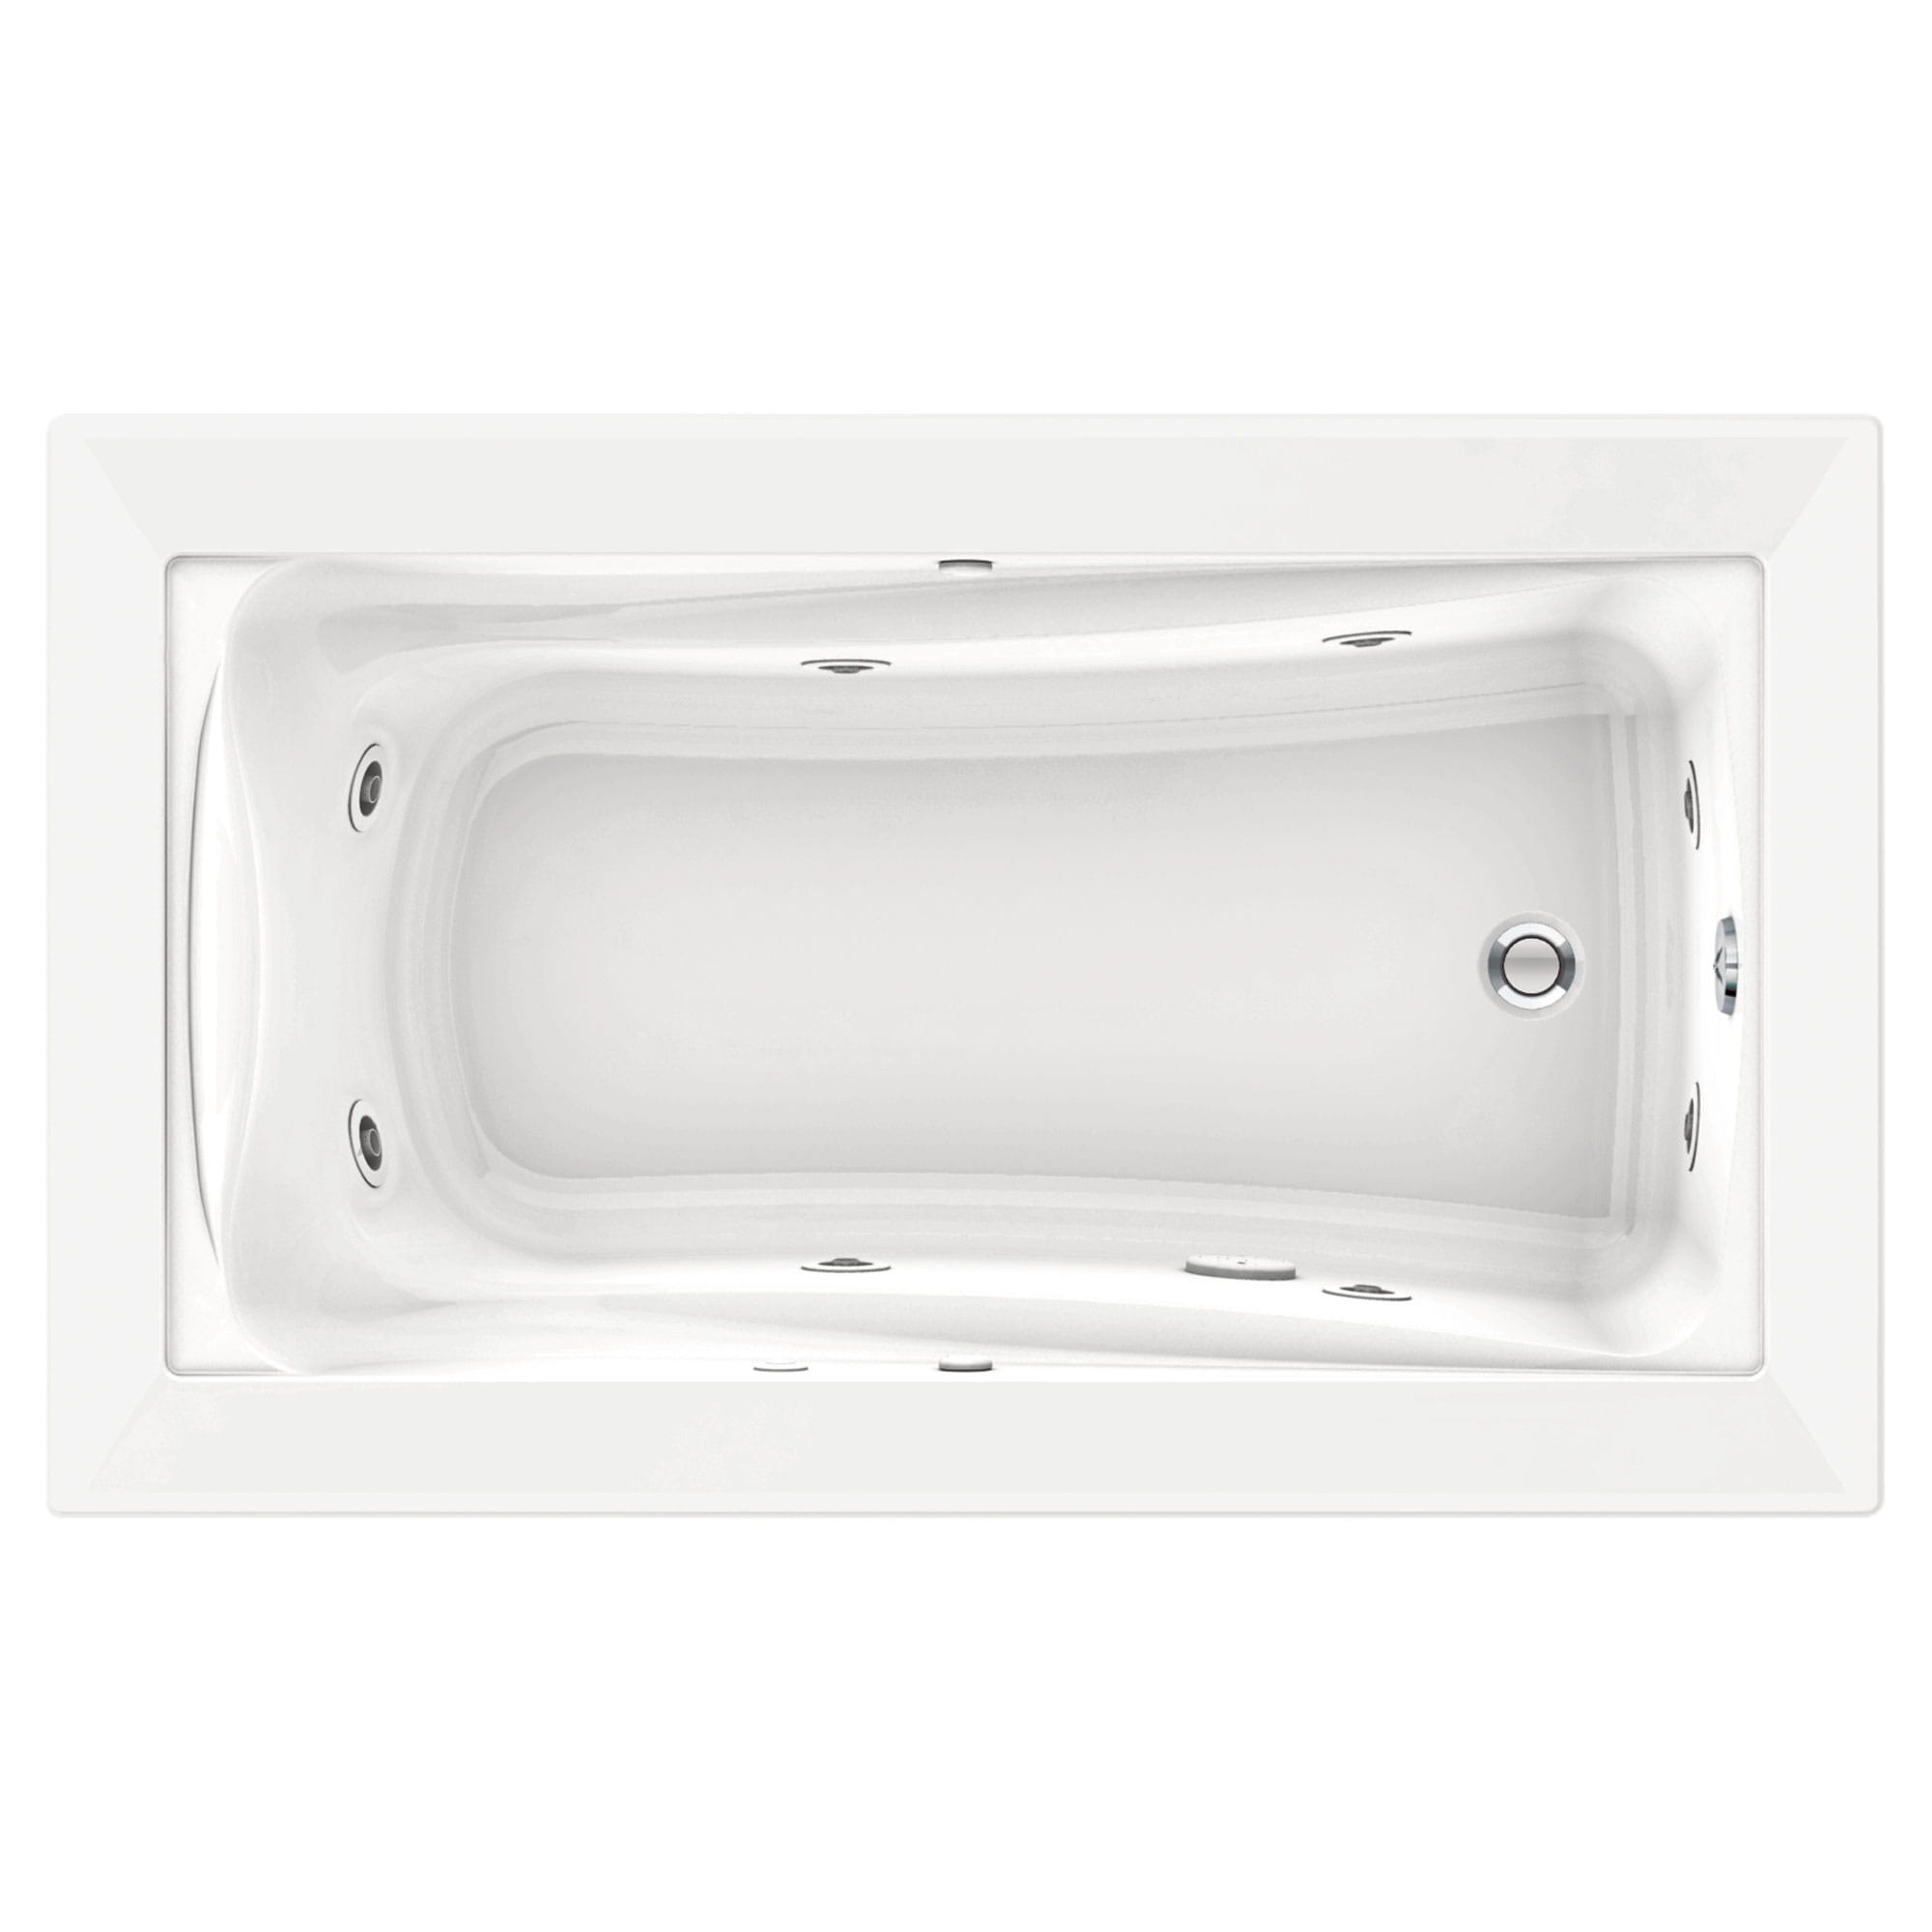 Green Tea® 60 x 36-Inch Drop-In Bathtub With EcoSilent® EverClean® Hydromassage System